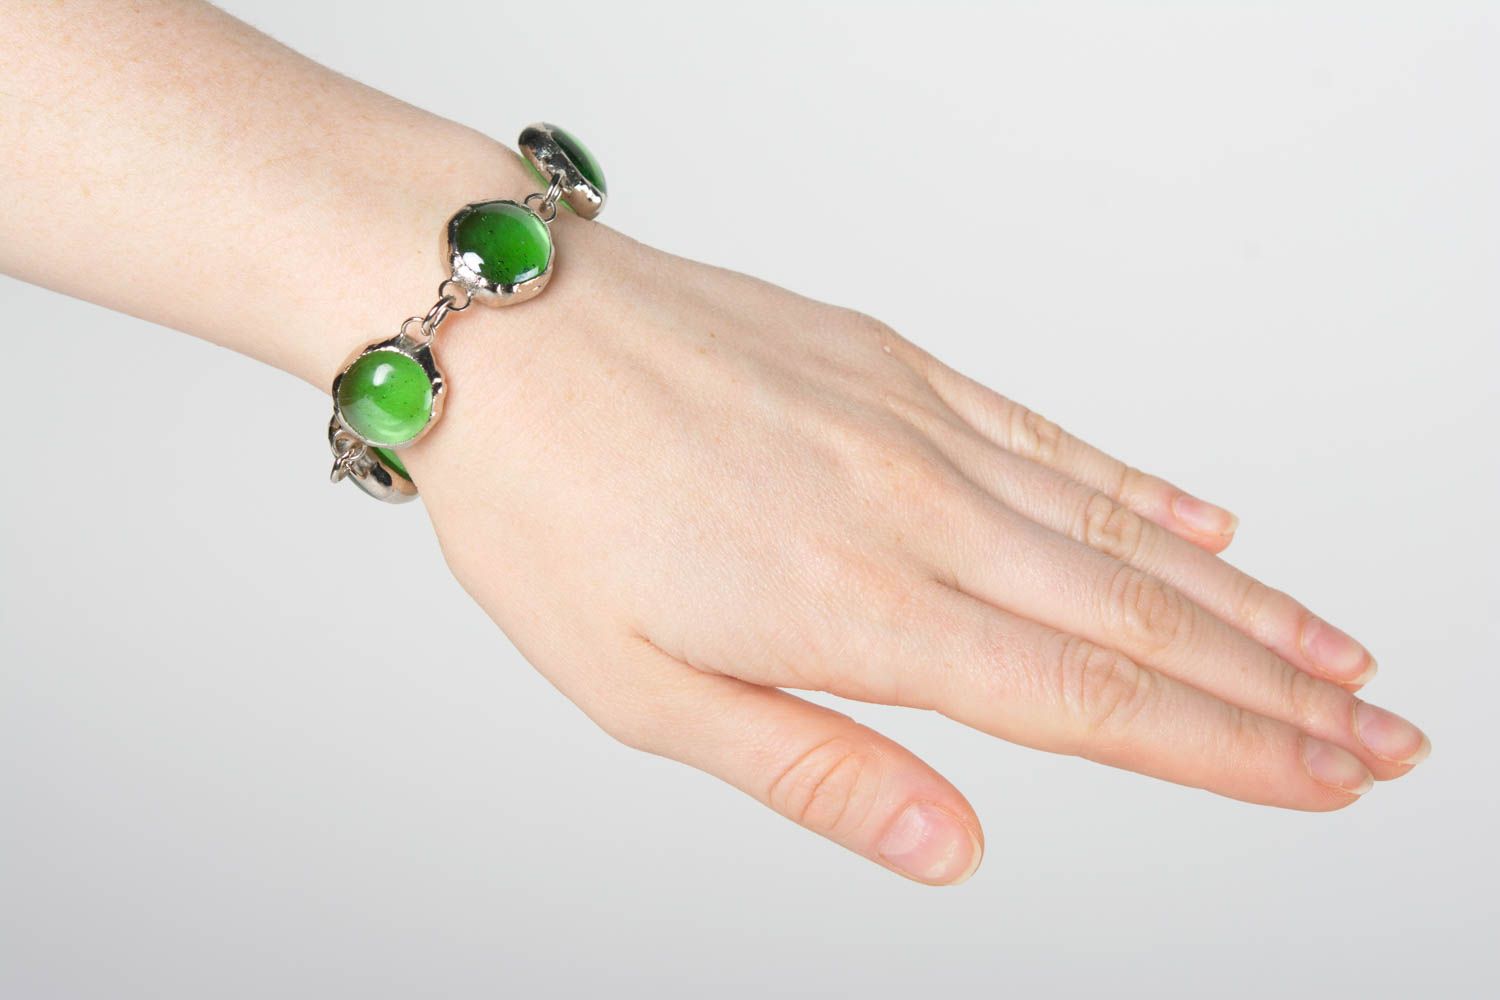 Handmade green glass and metal designer jewelry set wrist bracelet and earrings photo 3